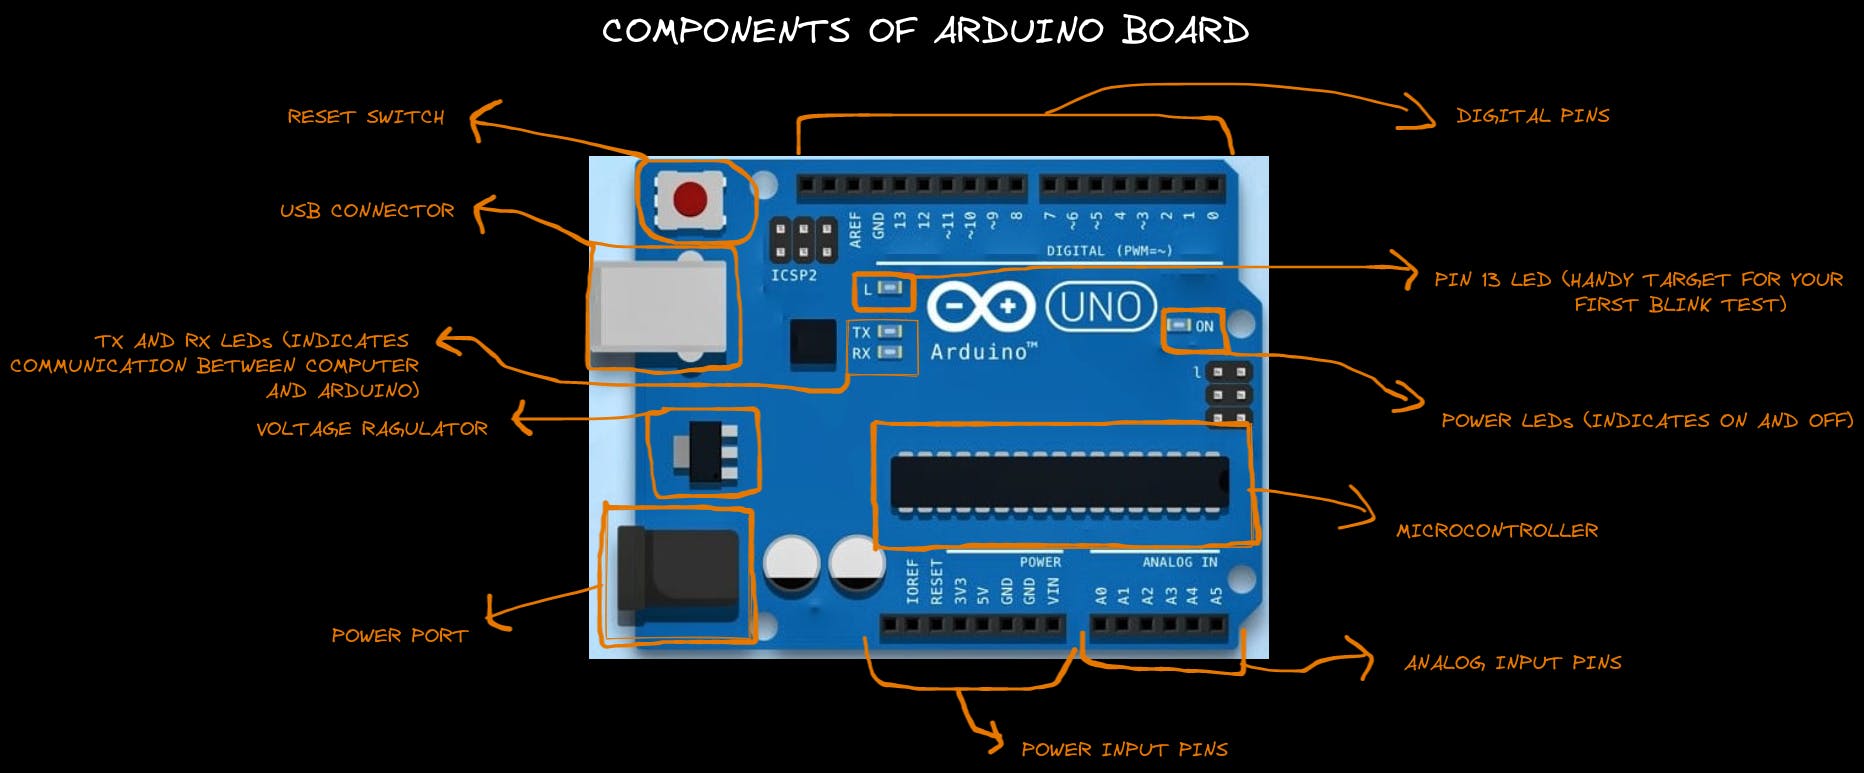 Arduino Components